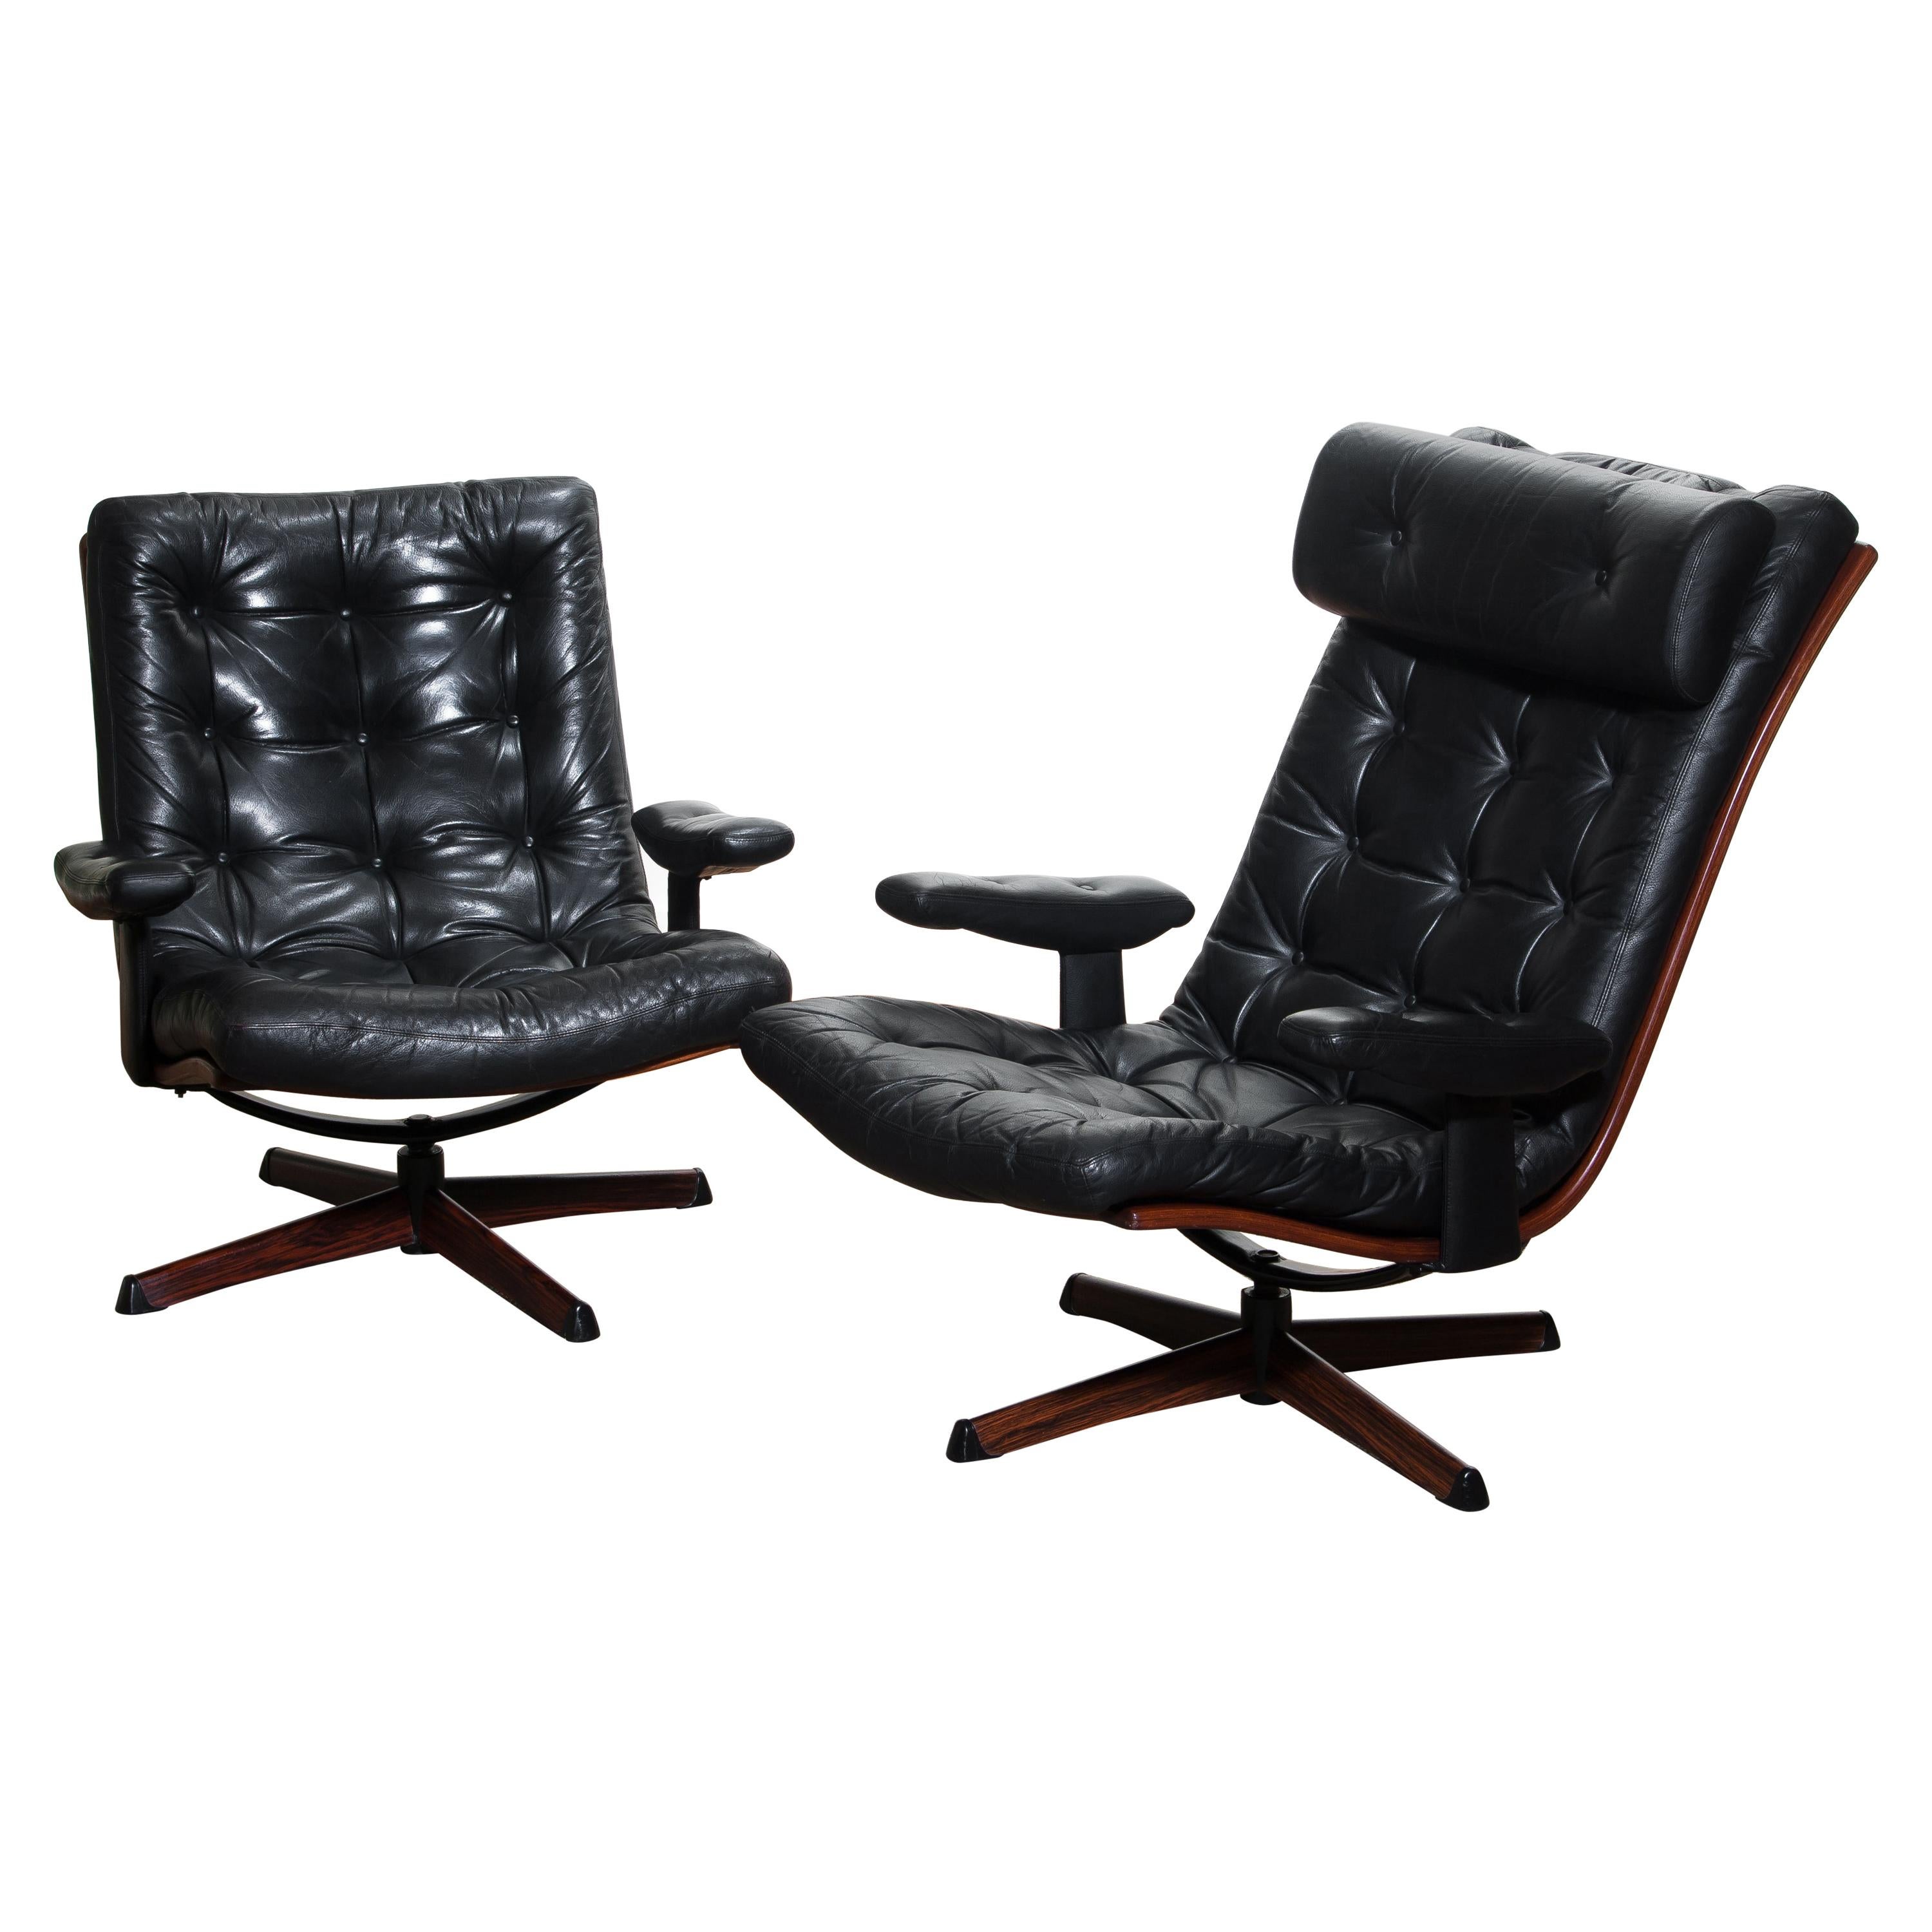 1960s Matching Pair of Black Leather Swivel Chairs by Göte Möbler Nässjö, Sweden